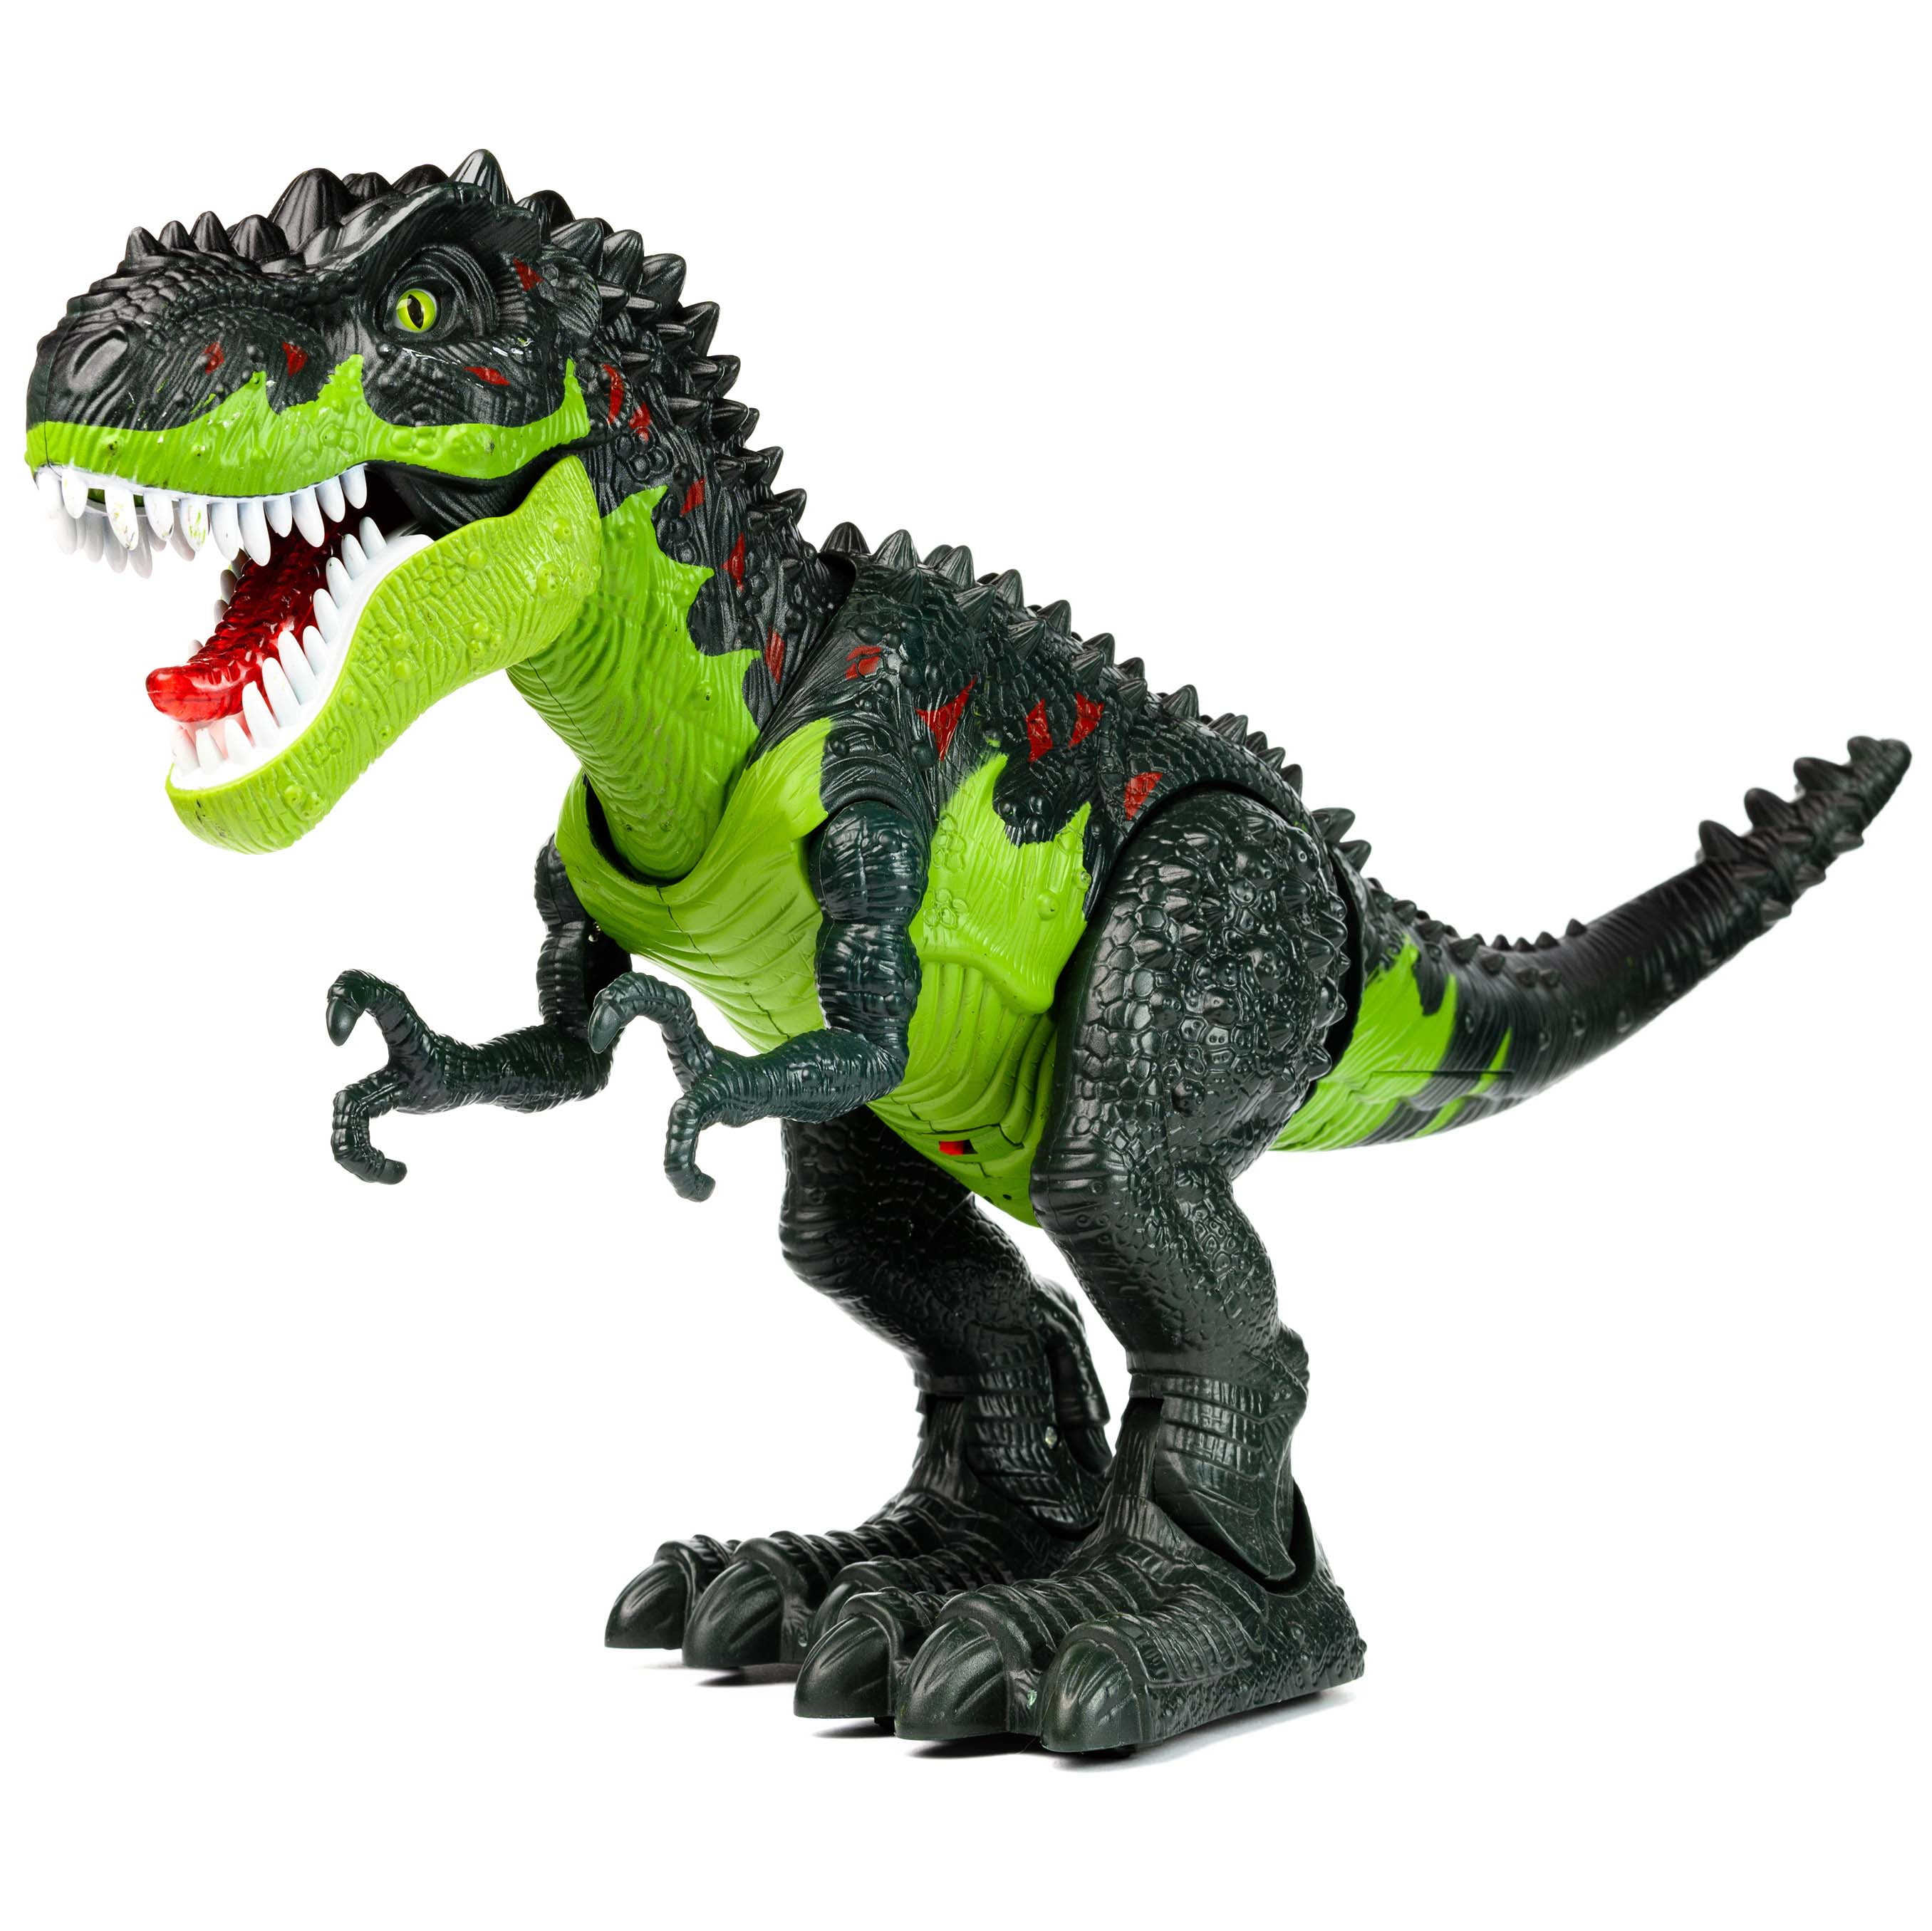 "Dinosaur-Tyrannosaurus Rex" 14 cm 5 pcs Set-Big-Game Figures 